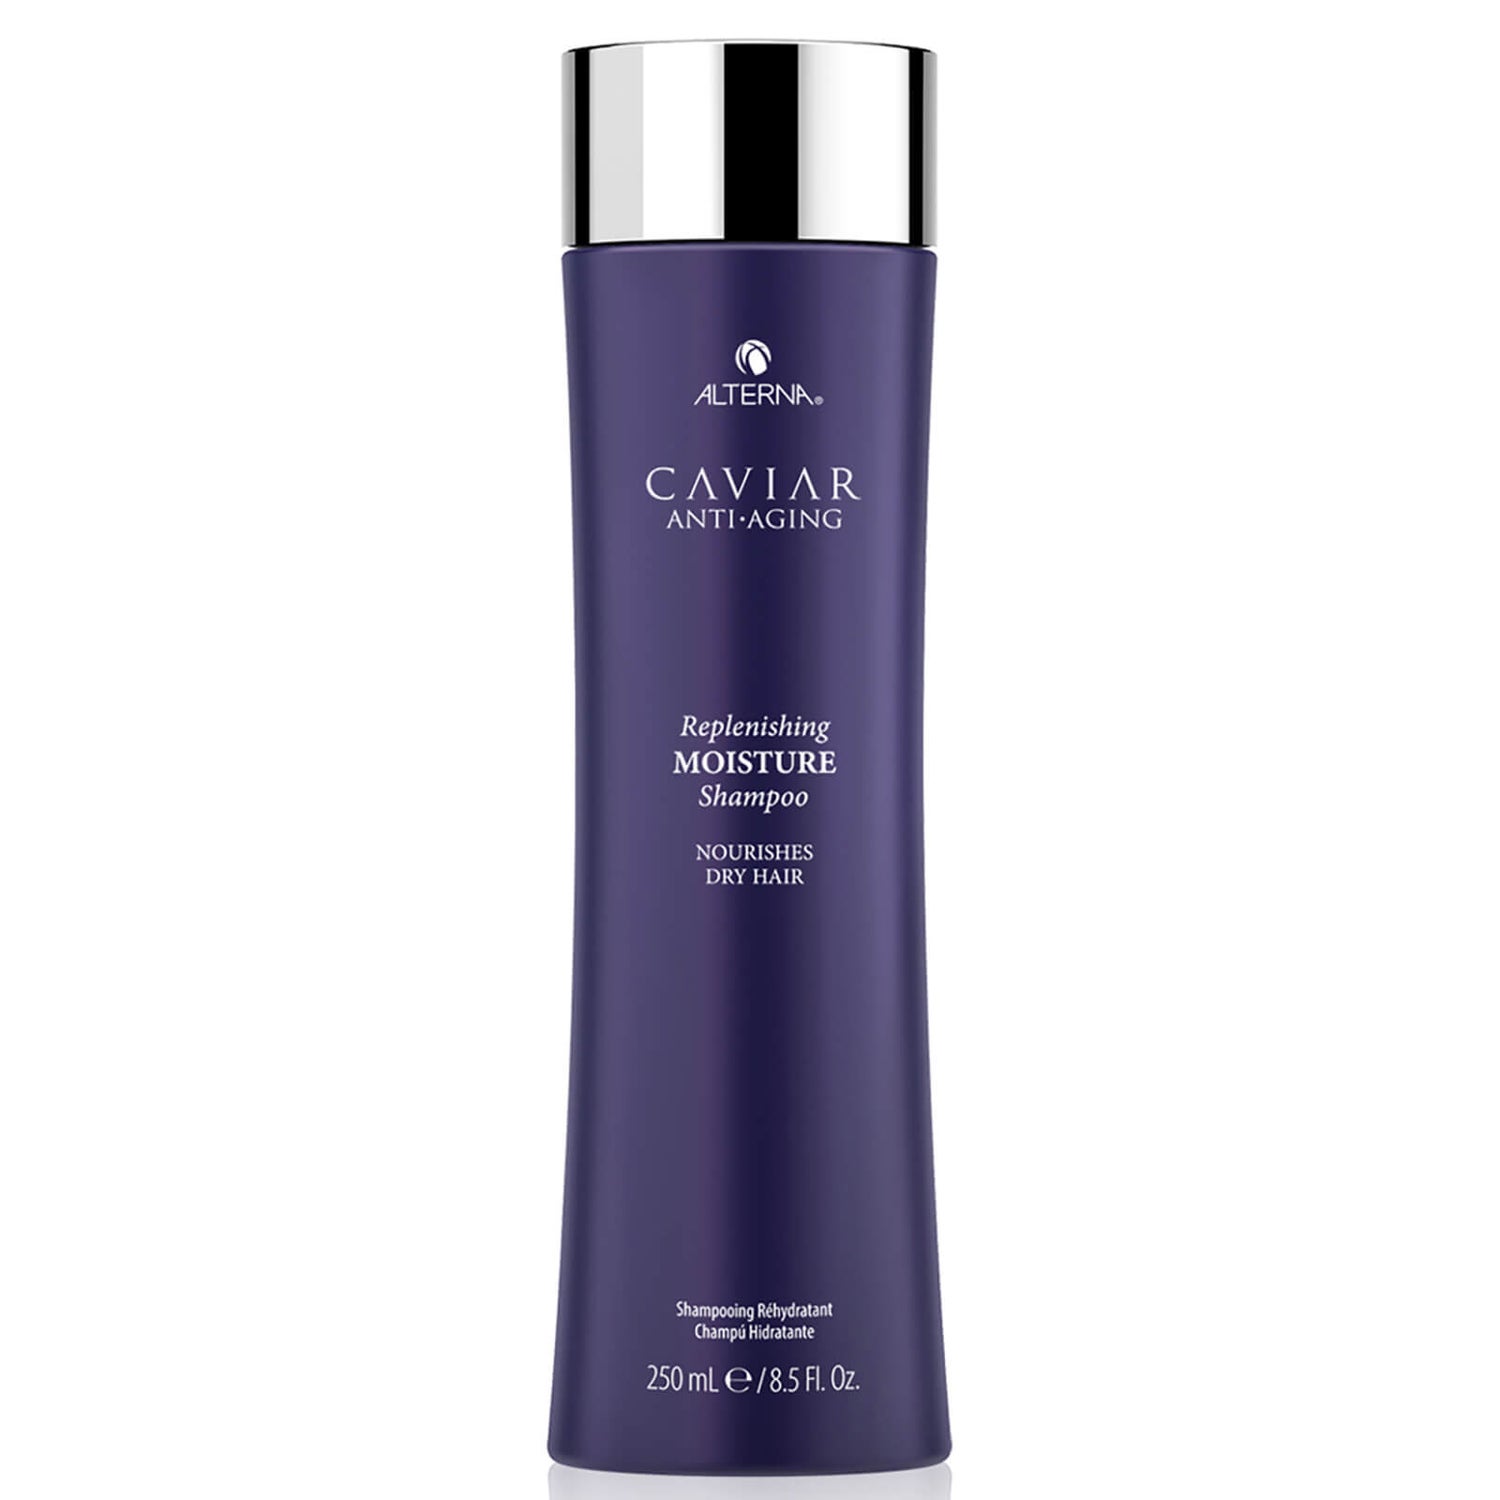 Alterna CAVIAR Anti-Aging Replenishing Moisture Shampoo (8.5 fl. oz.)